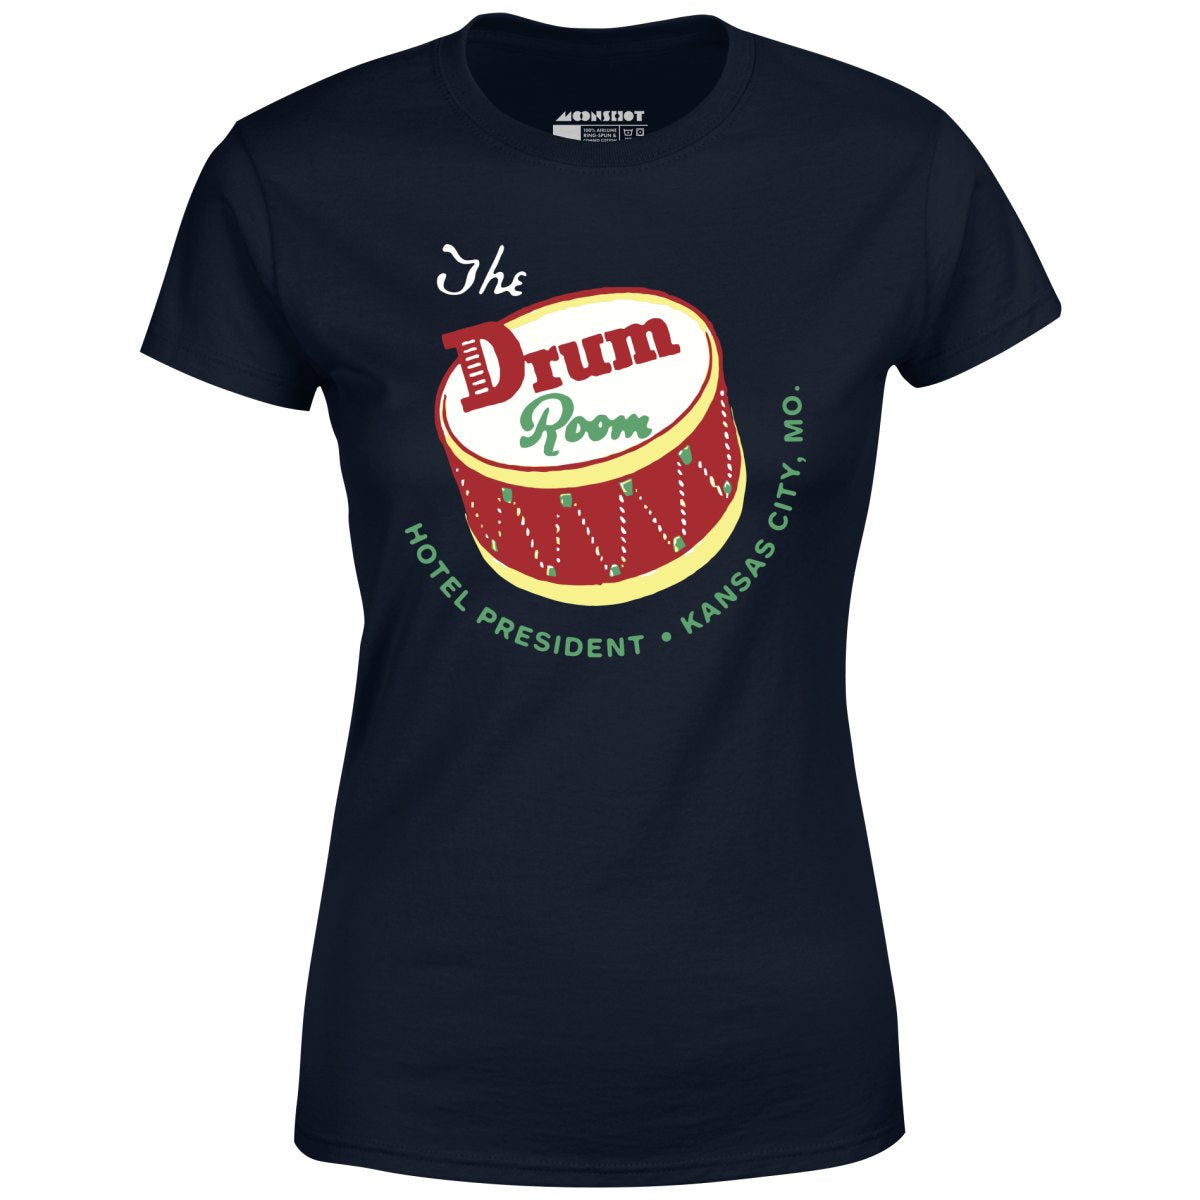 The Drum Room - Kansas City, MO - Vintage Restaurant - Women's T-Shirt